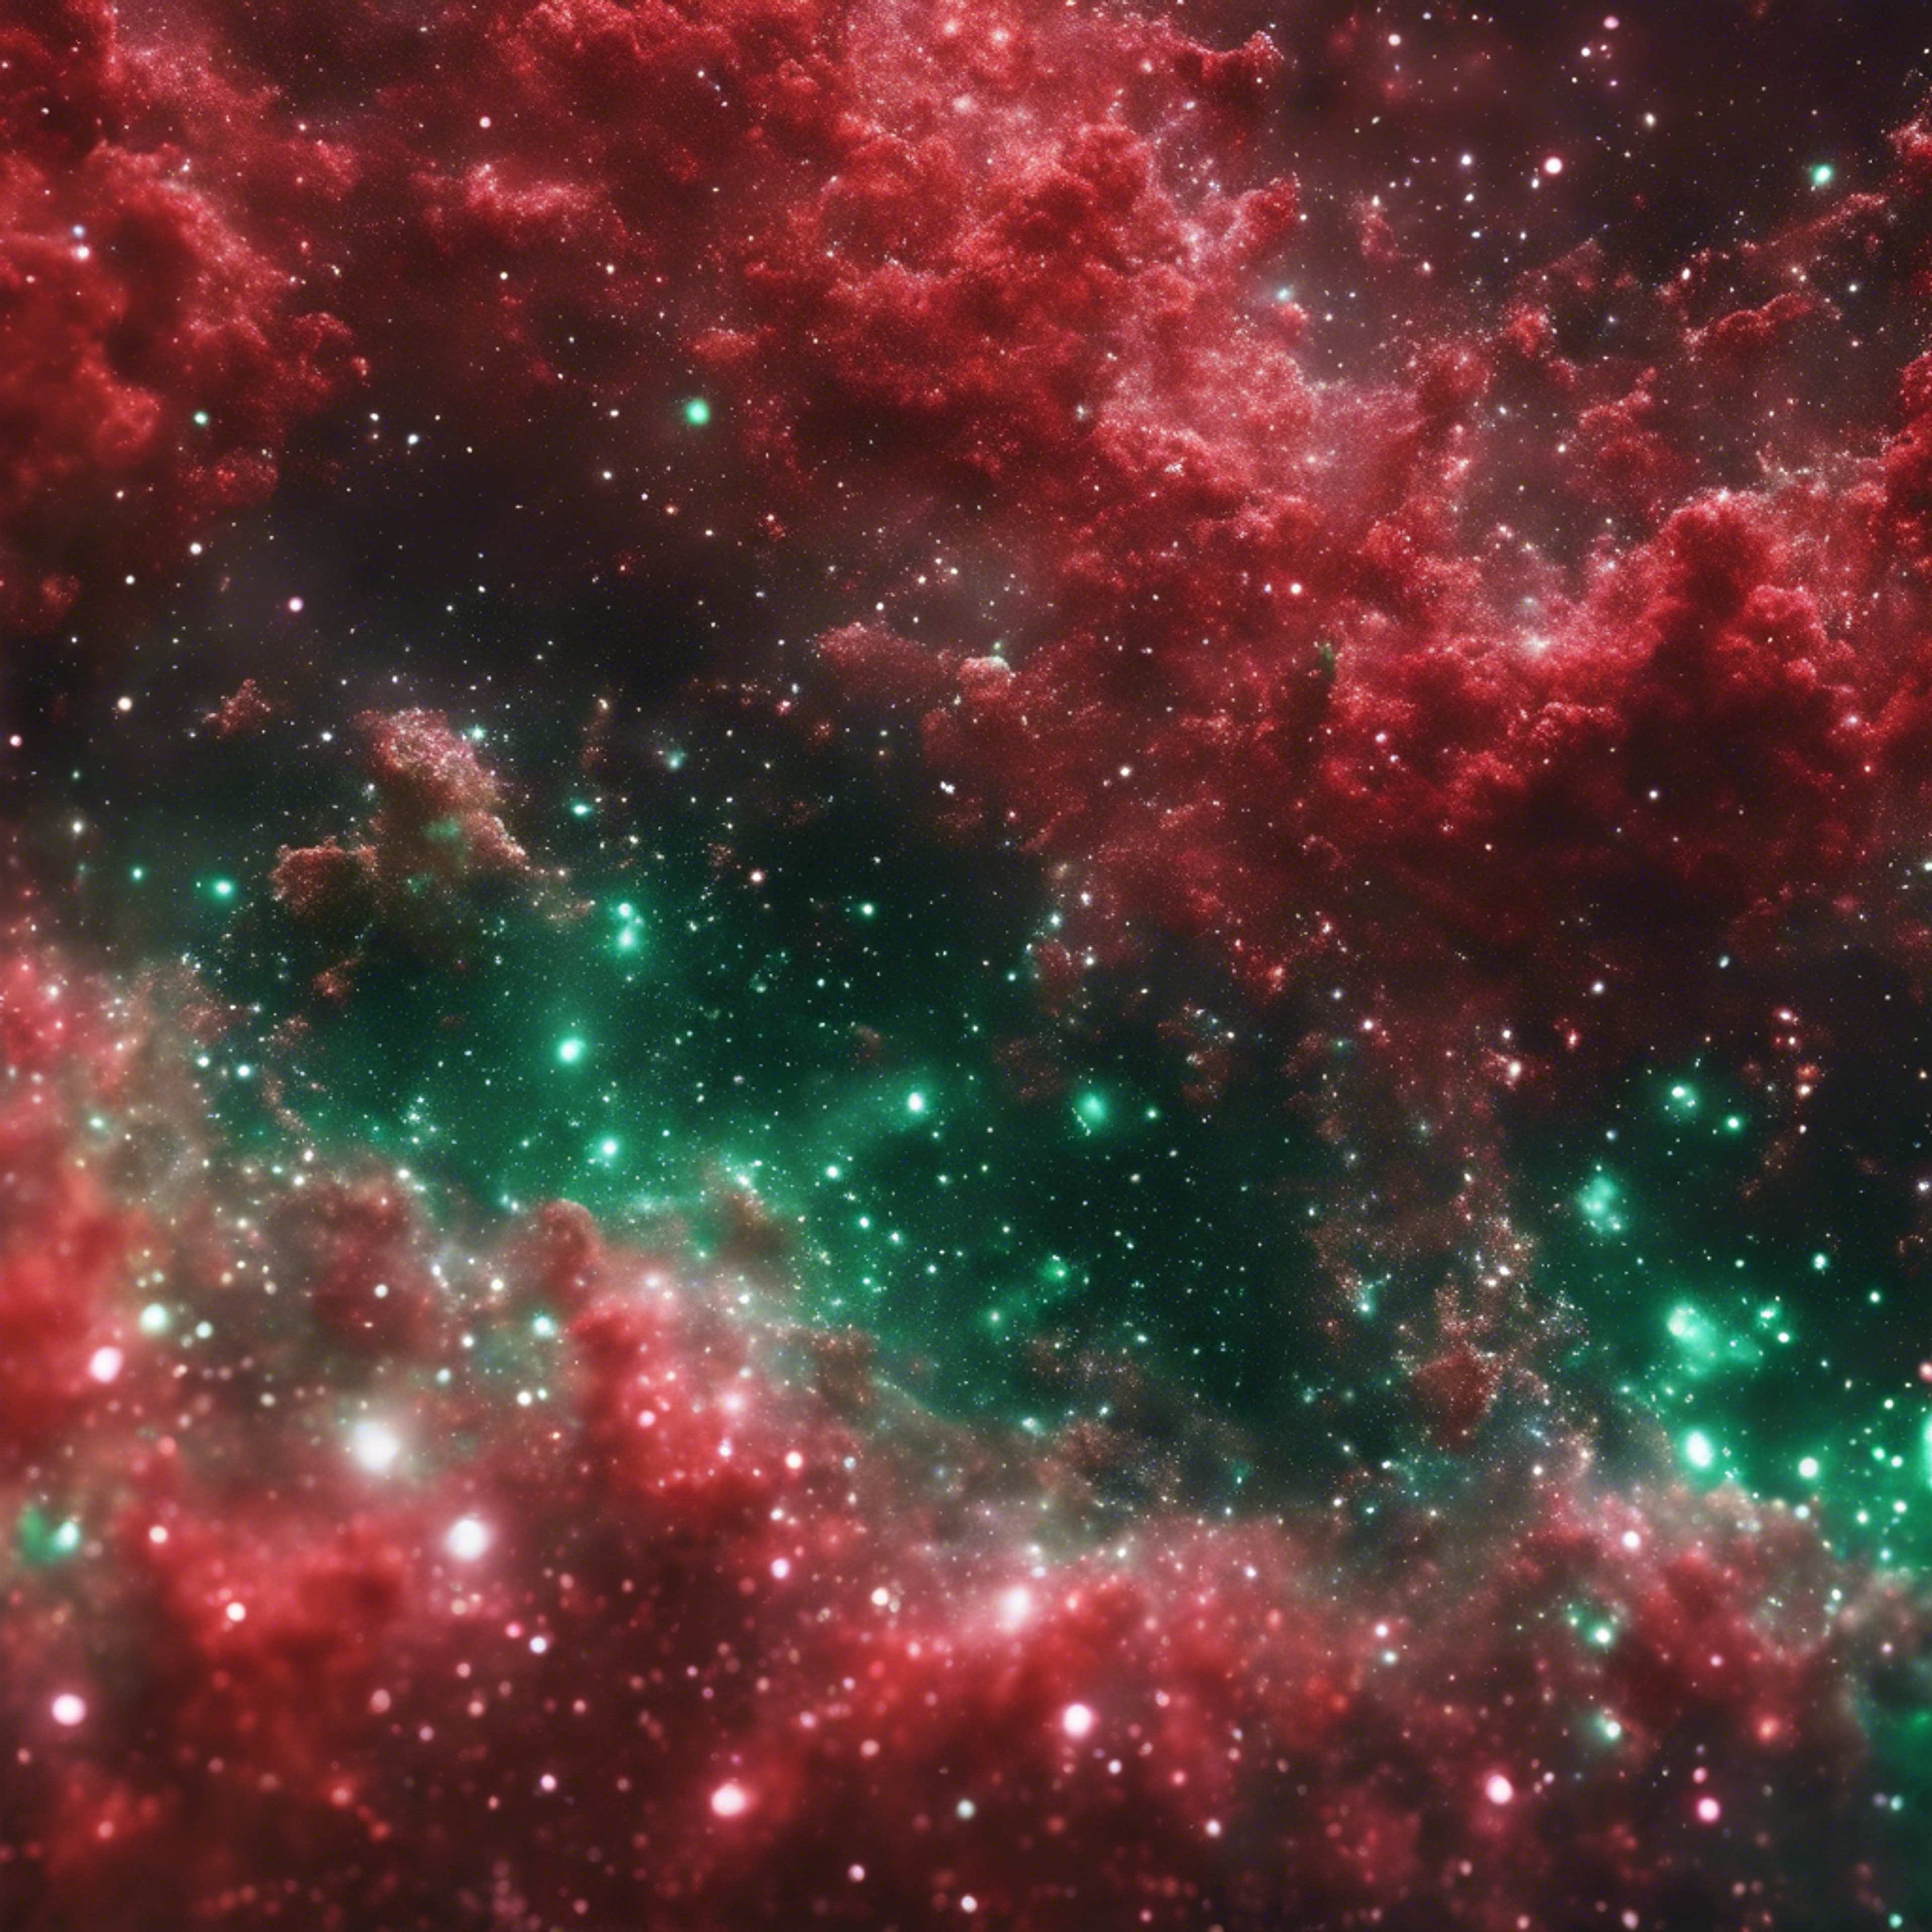 Red and green glitter spread like a nebula in space Hintergrund[56bea9c0023d4b1f9afc]